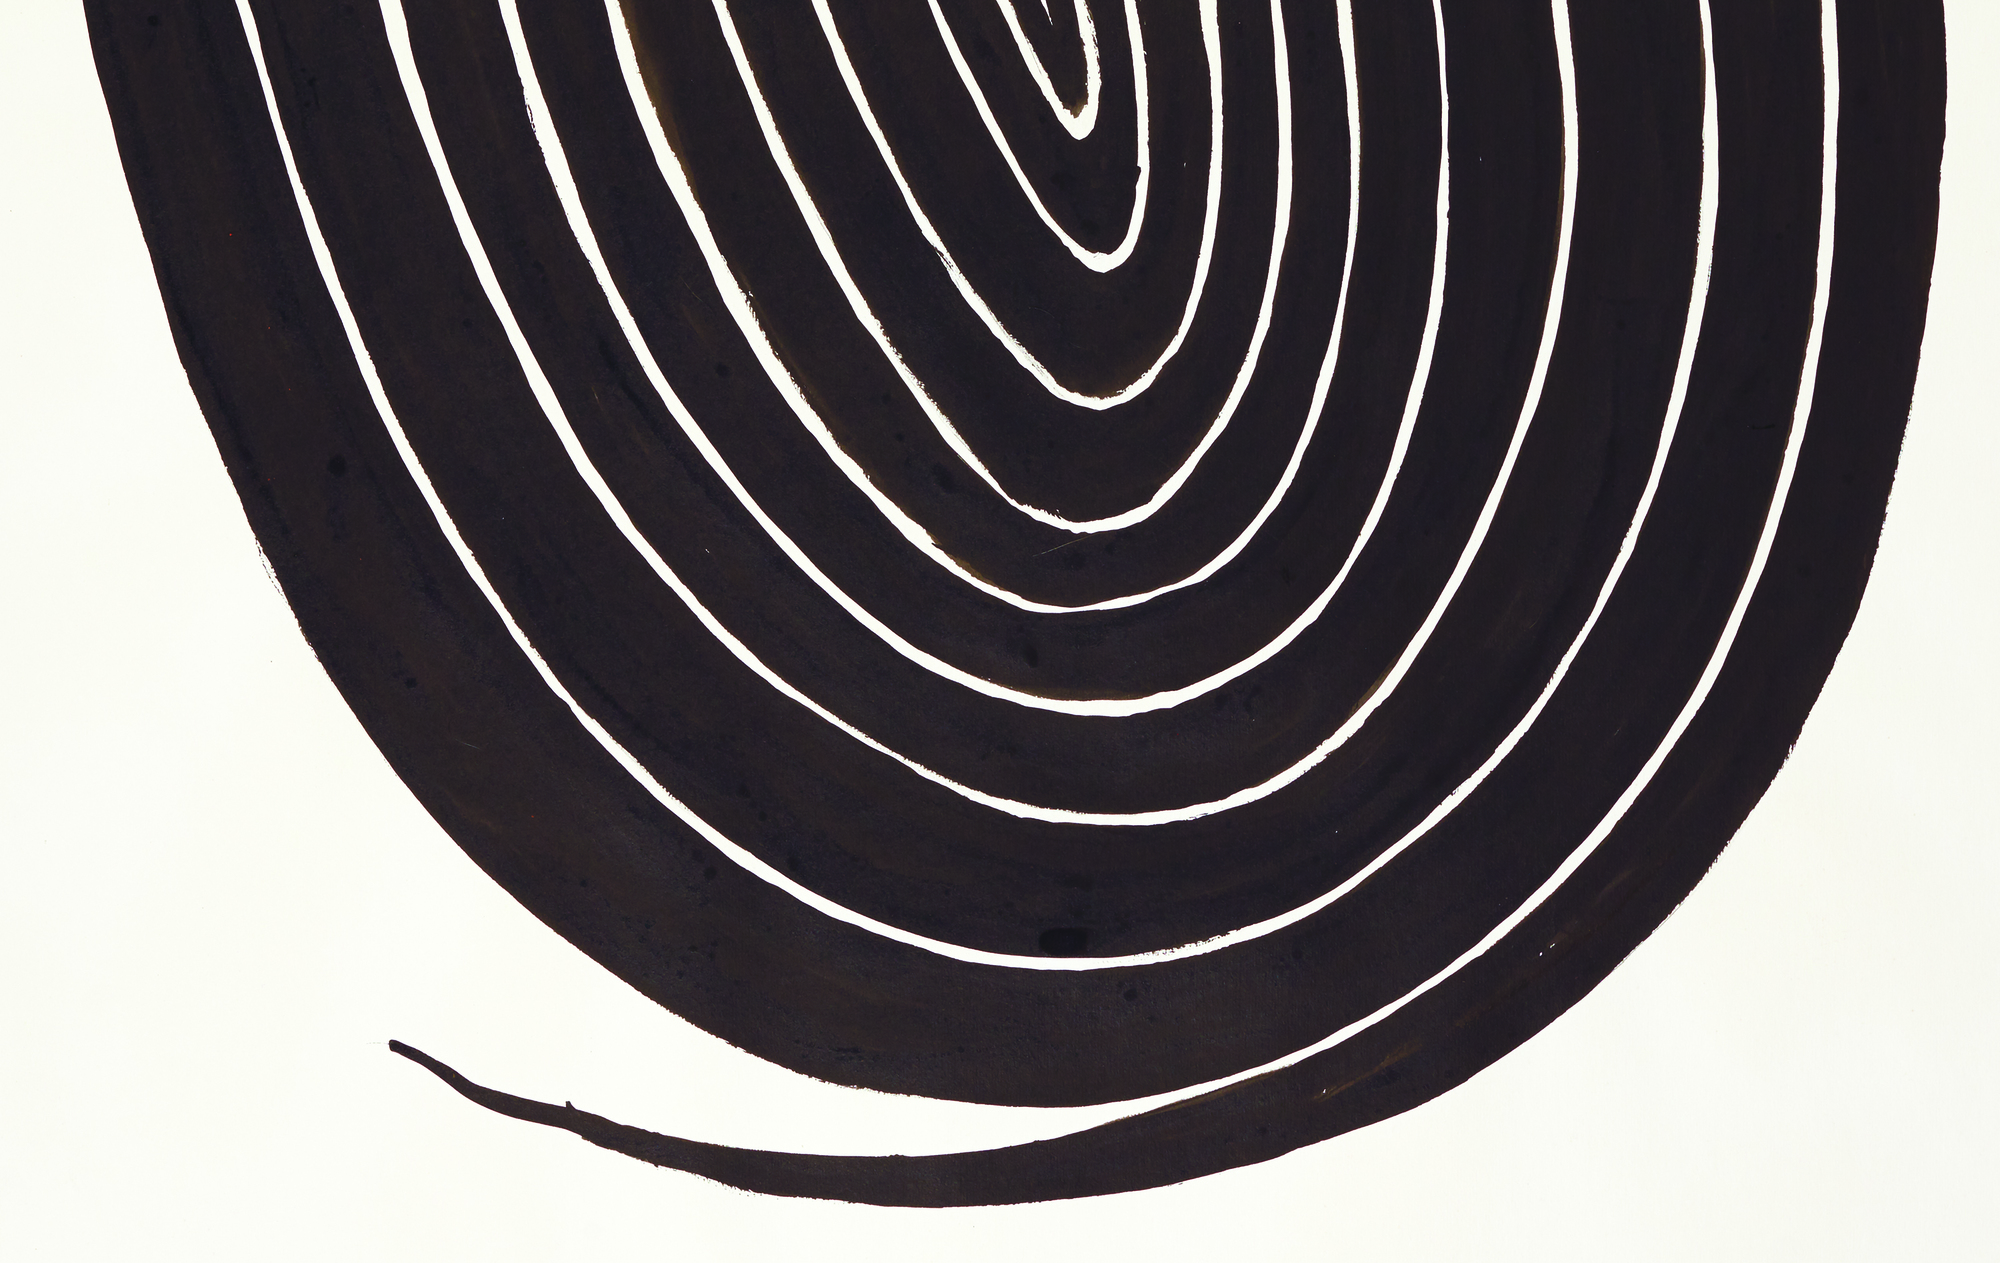 ALEXANDER CALDER - La espiral ovalada - gouache y tinta sobre papel - 43 1/4 x 29 1/2 in.